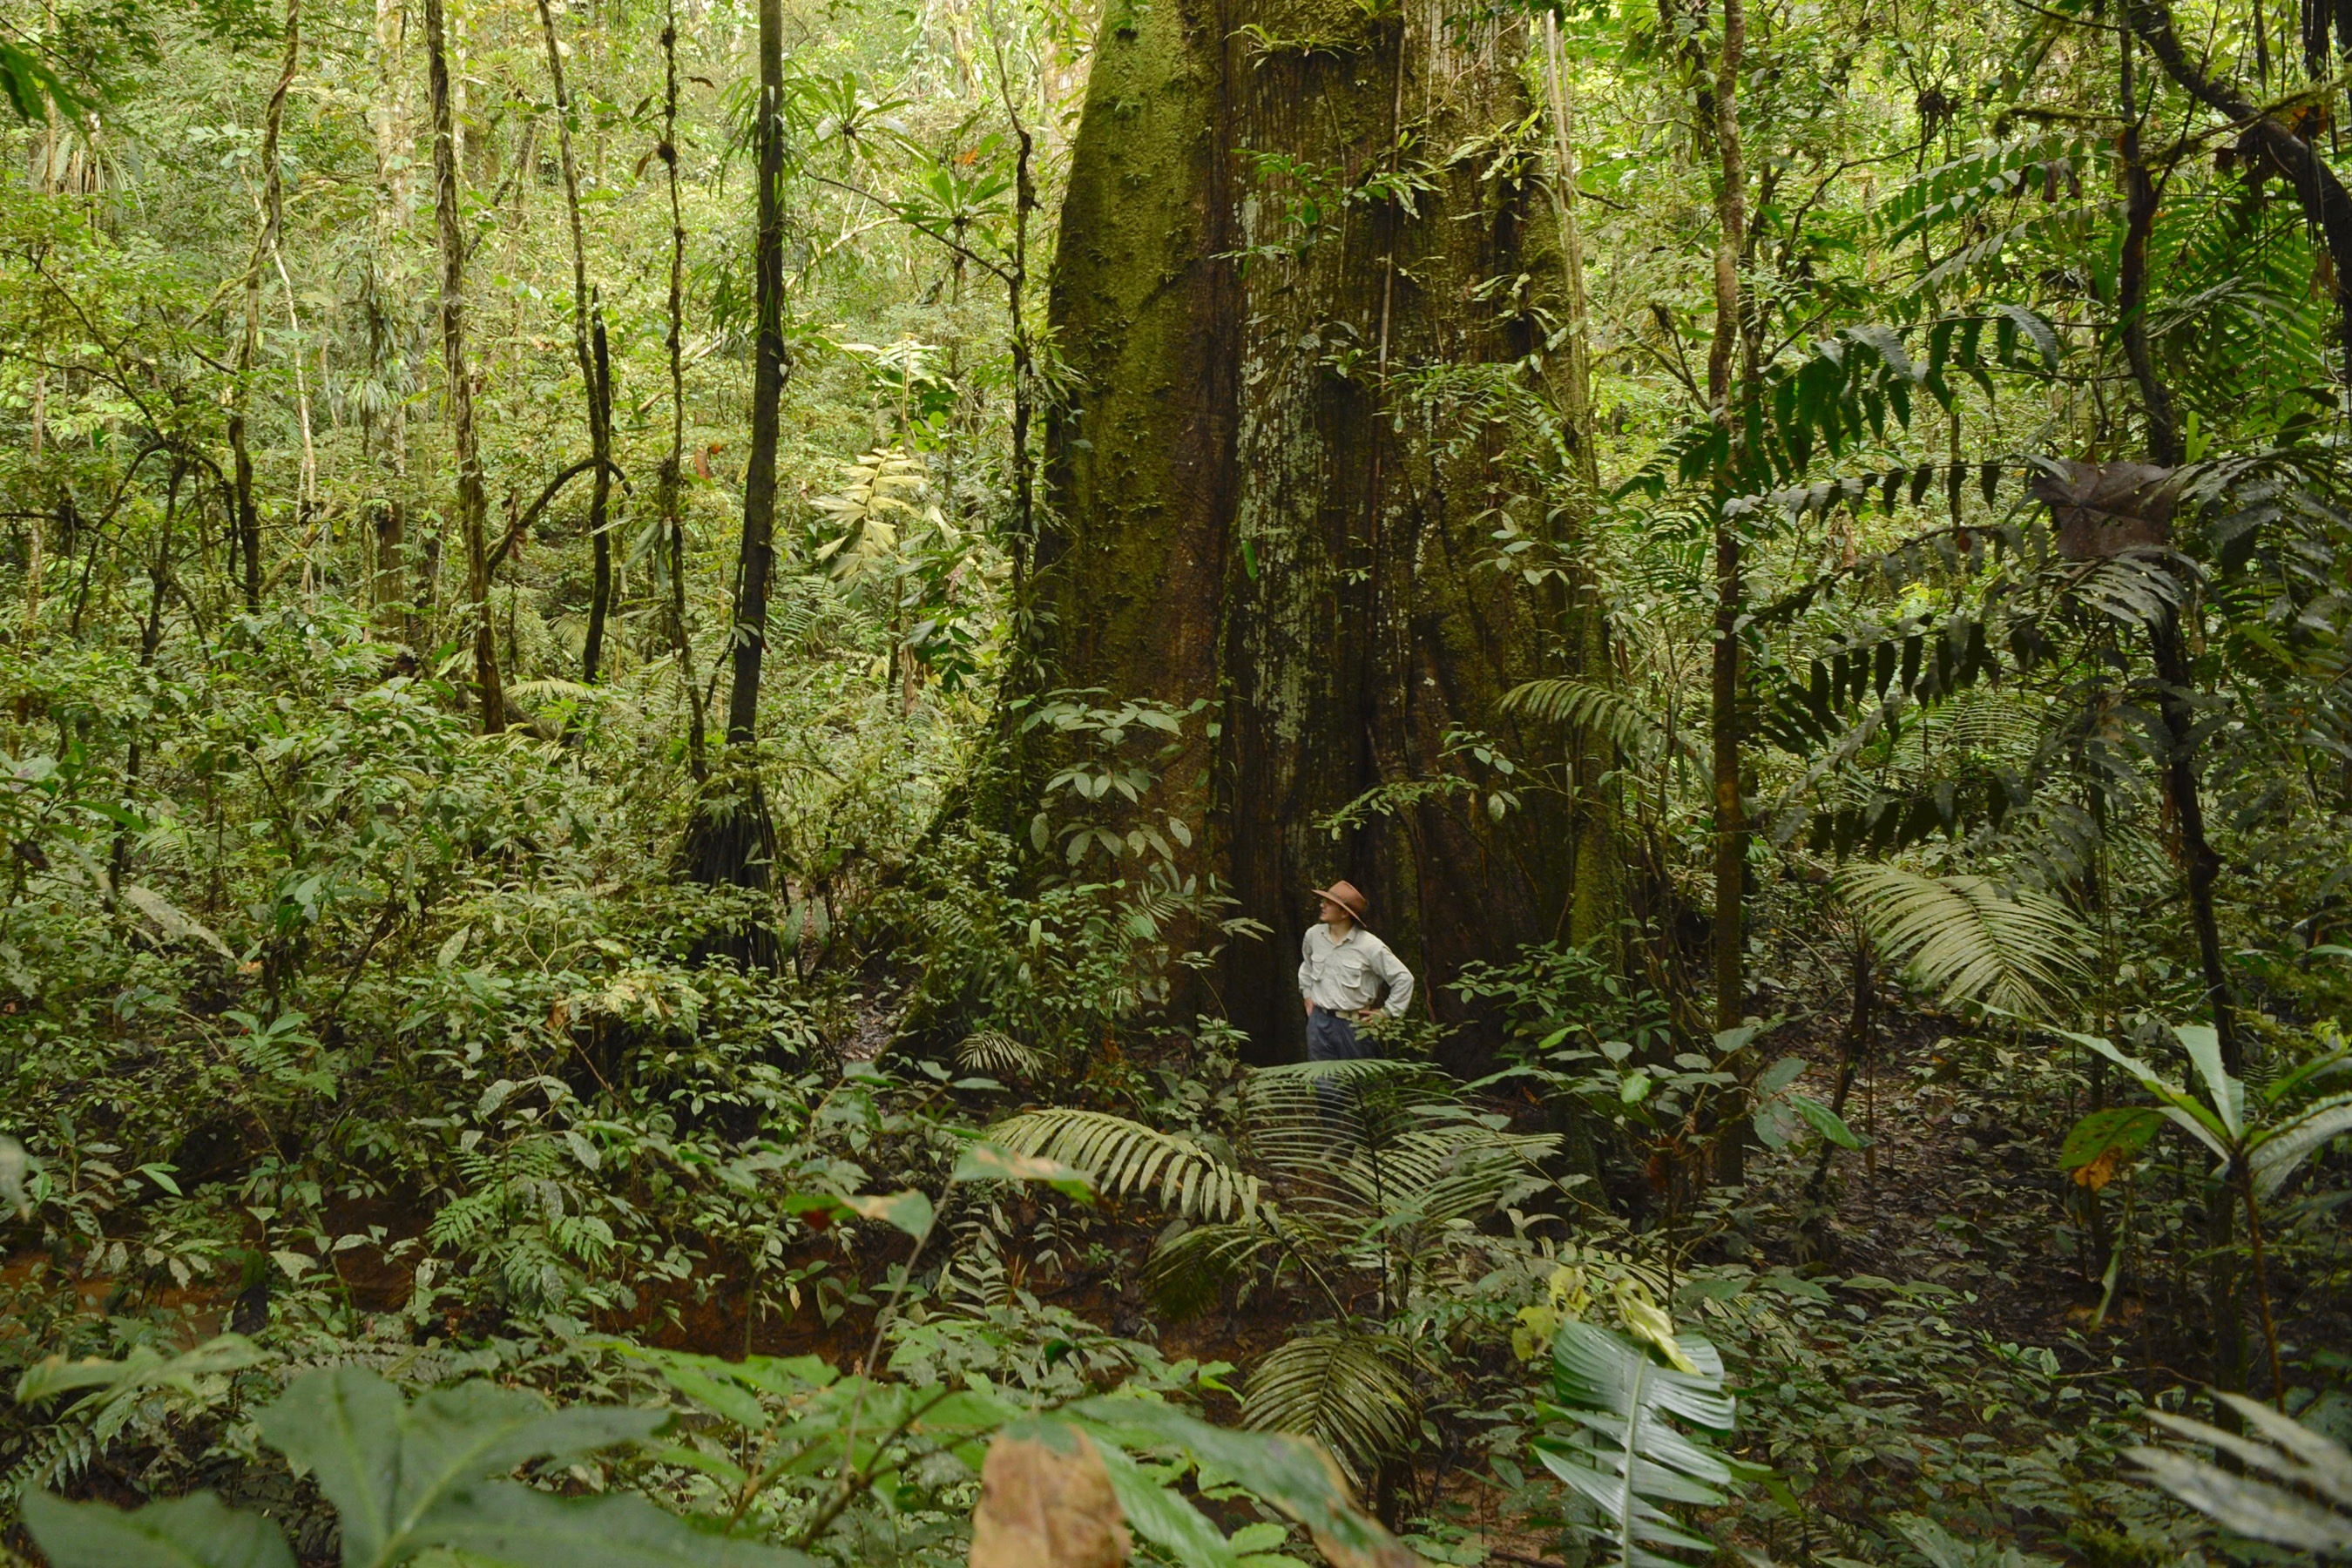 Fabián López, Cuenca regional coordinator, Nature and Culture International (NCI), surveys the tropical forest under a towering ficus tree.